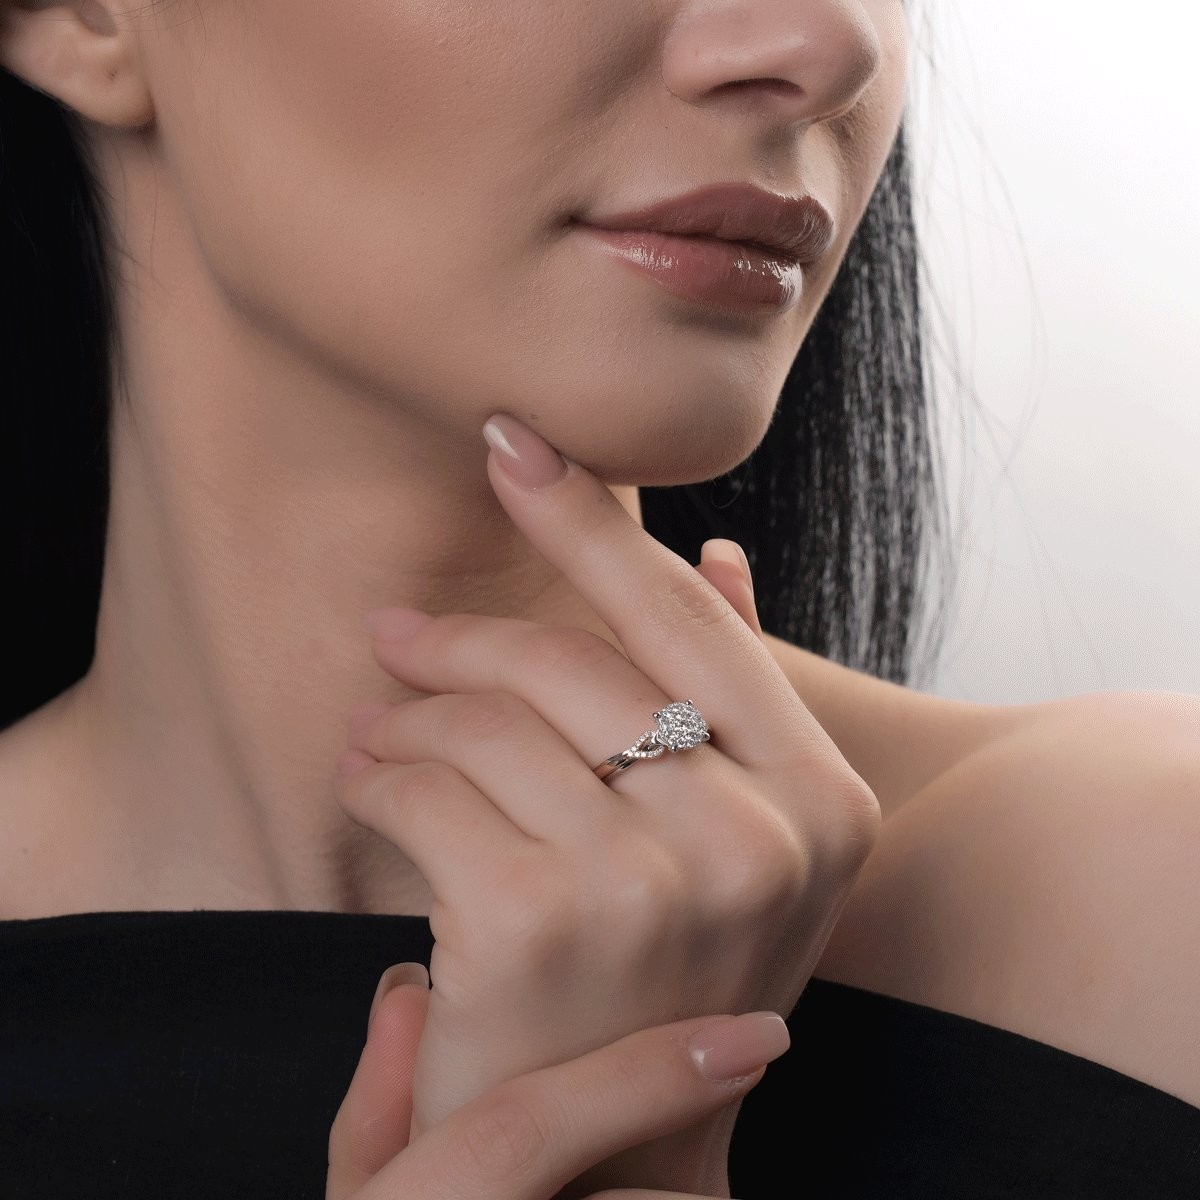 Inel de logodna din aur alb-roz de 18K cu diamante de 0.35ct